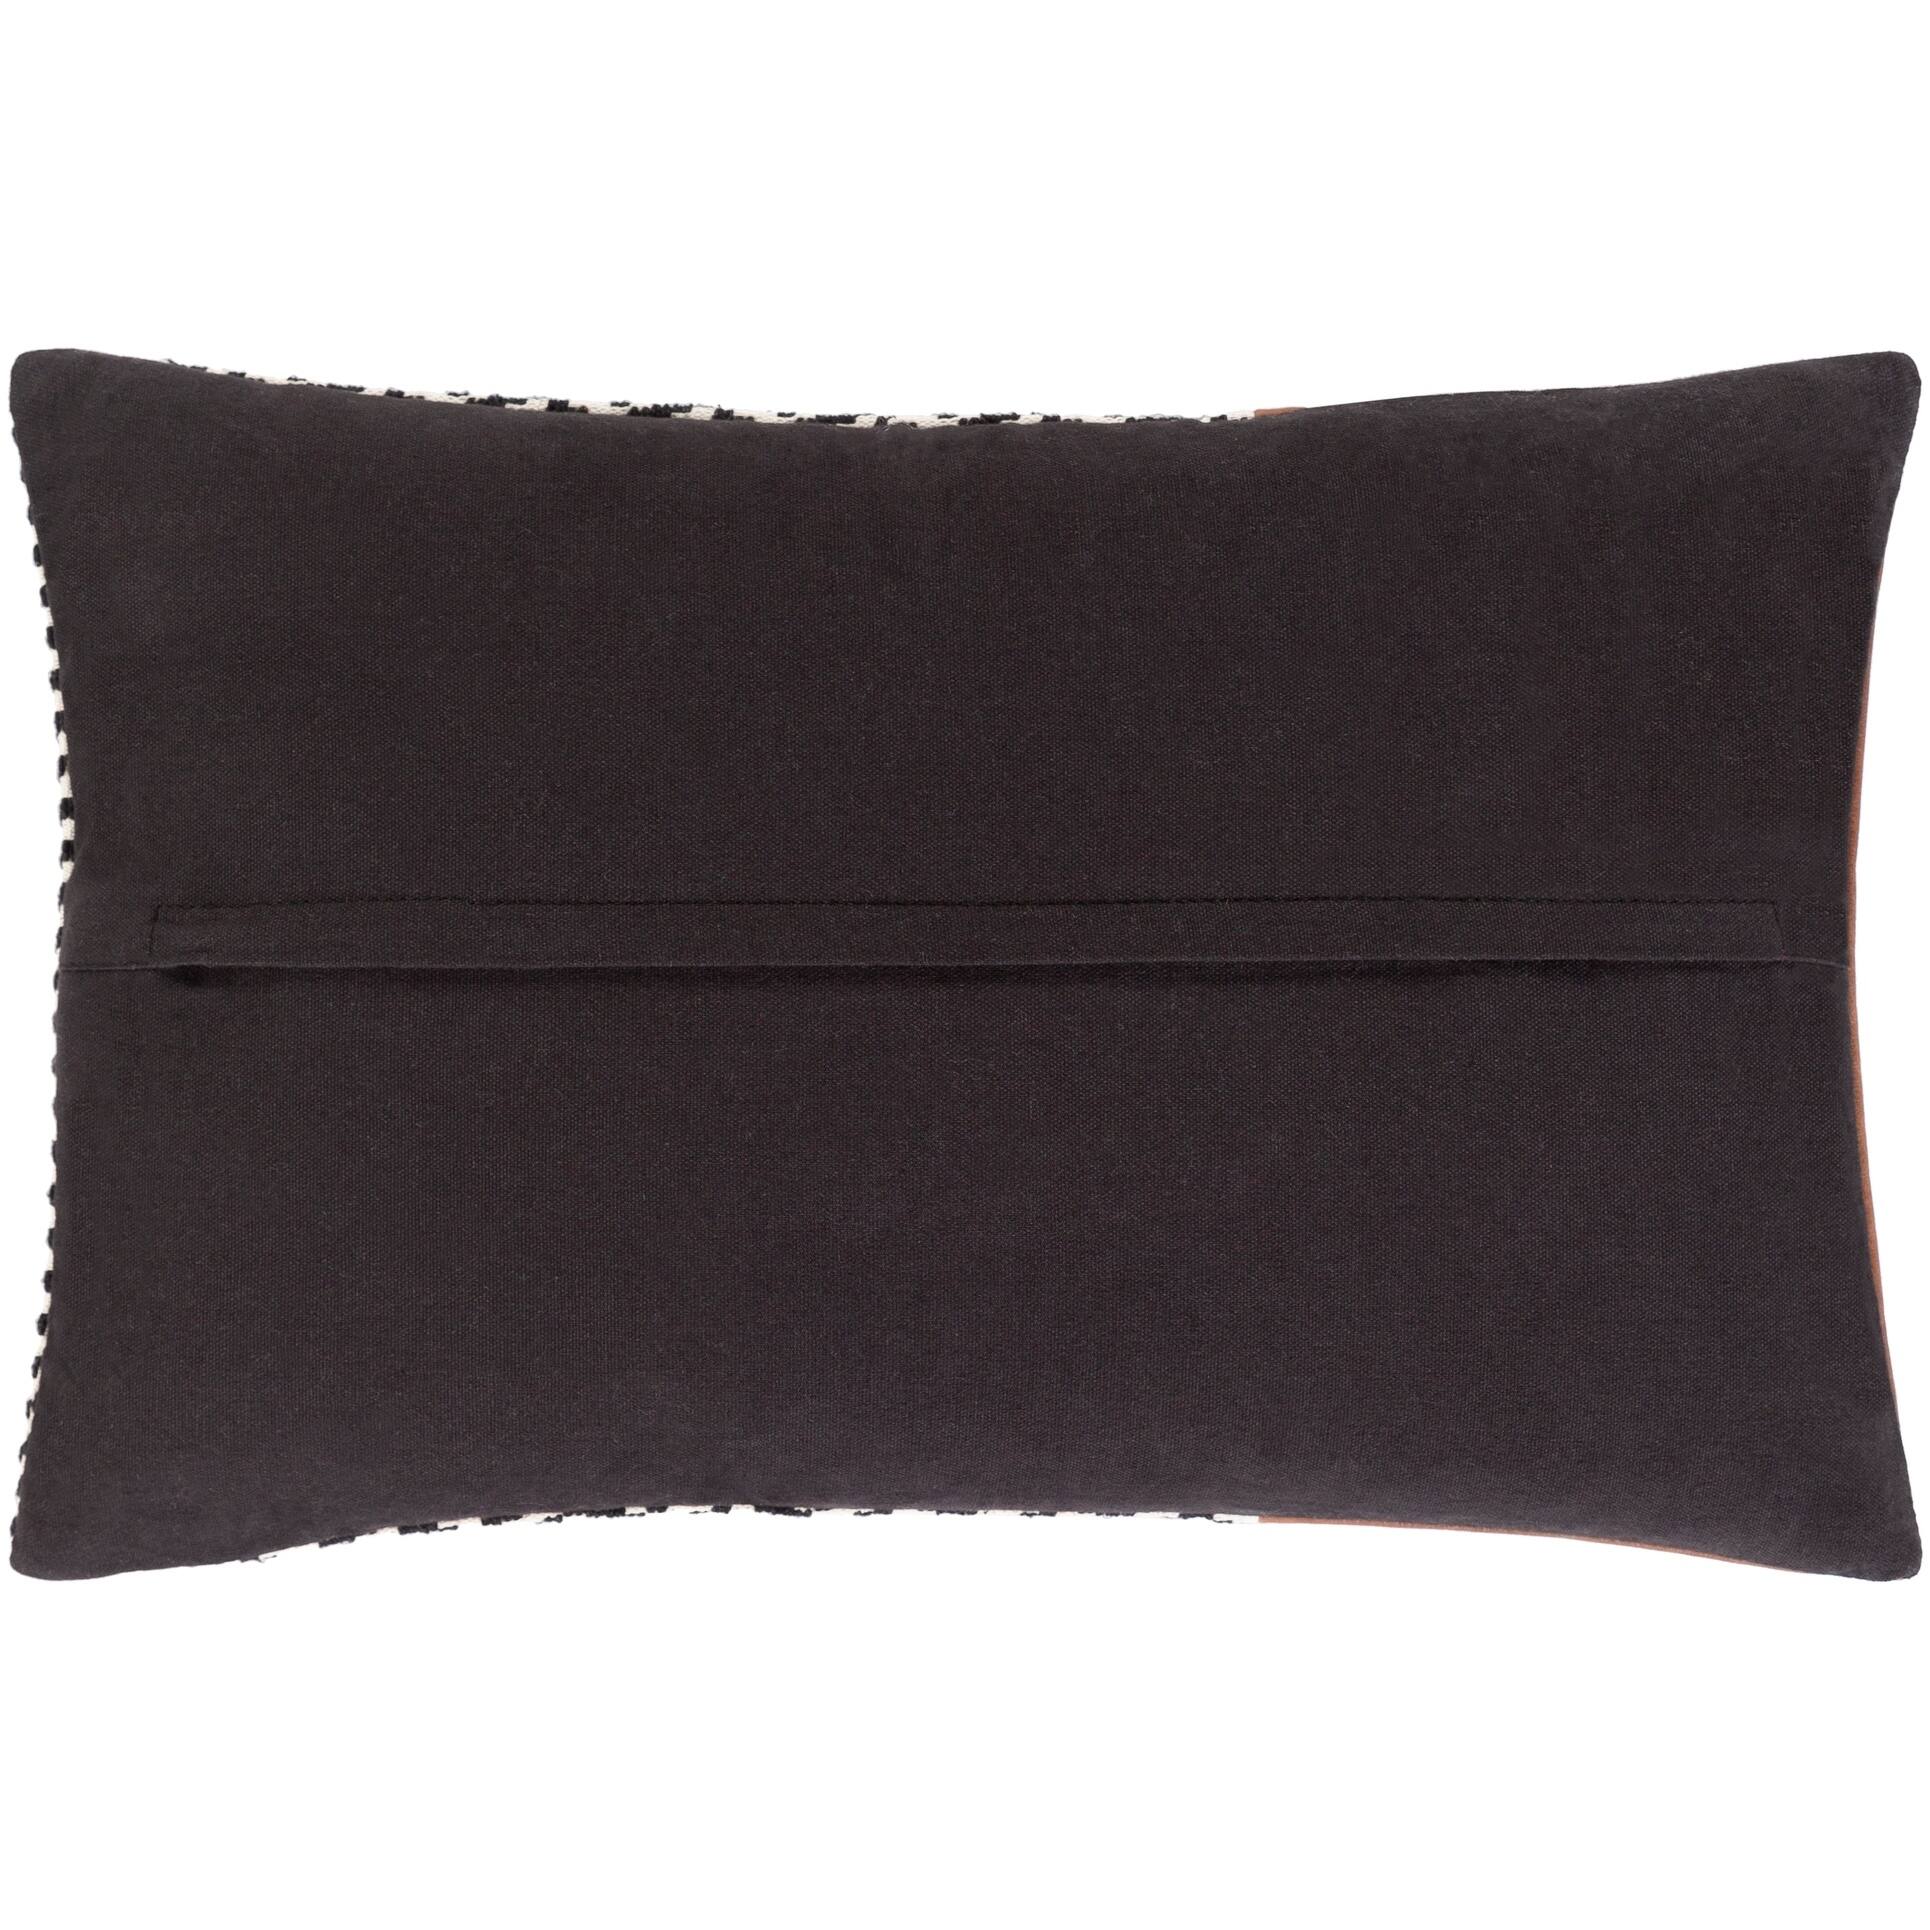 Fabiola Leather Striped Modern 13x20-inch Lumbar Throw Pillow